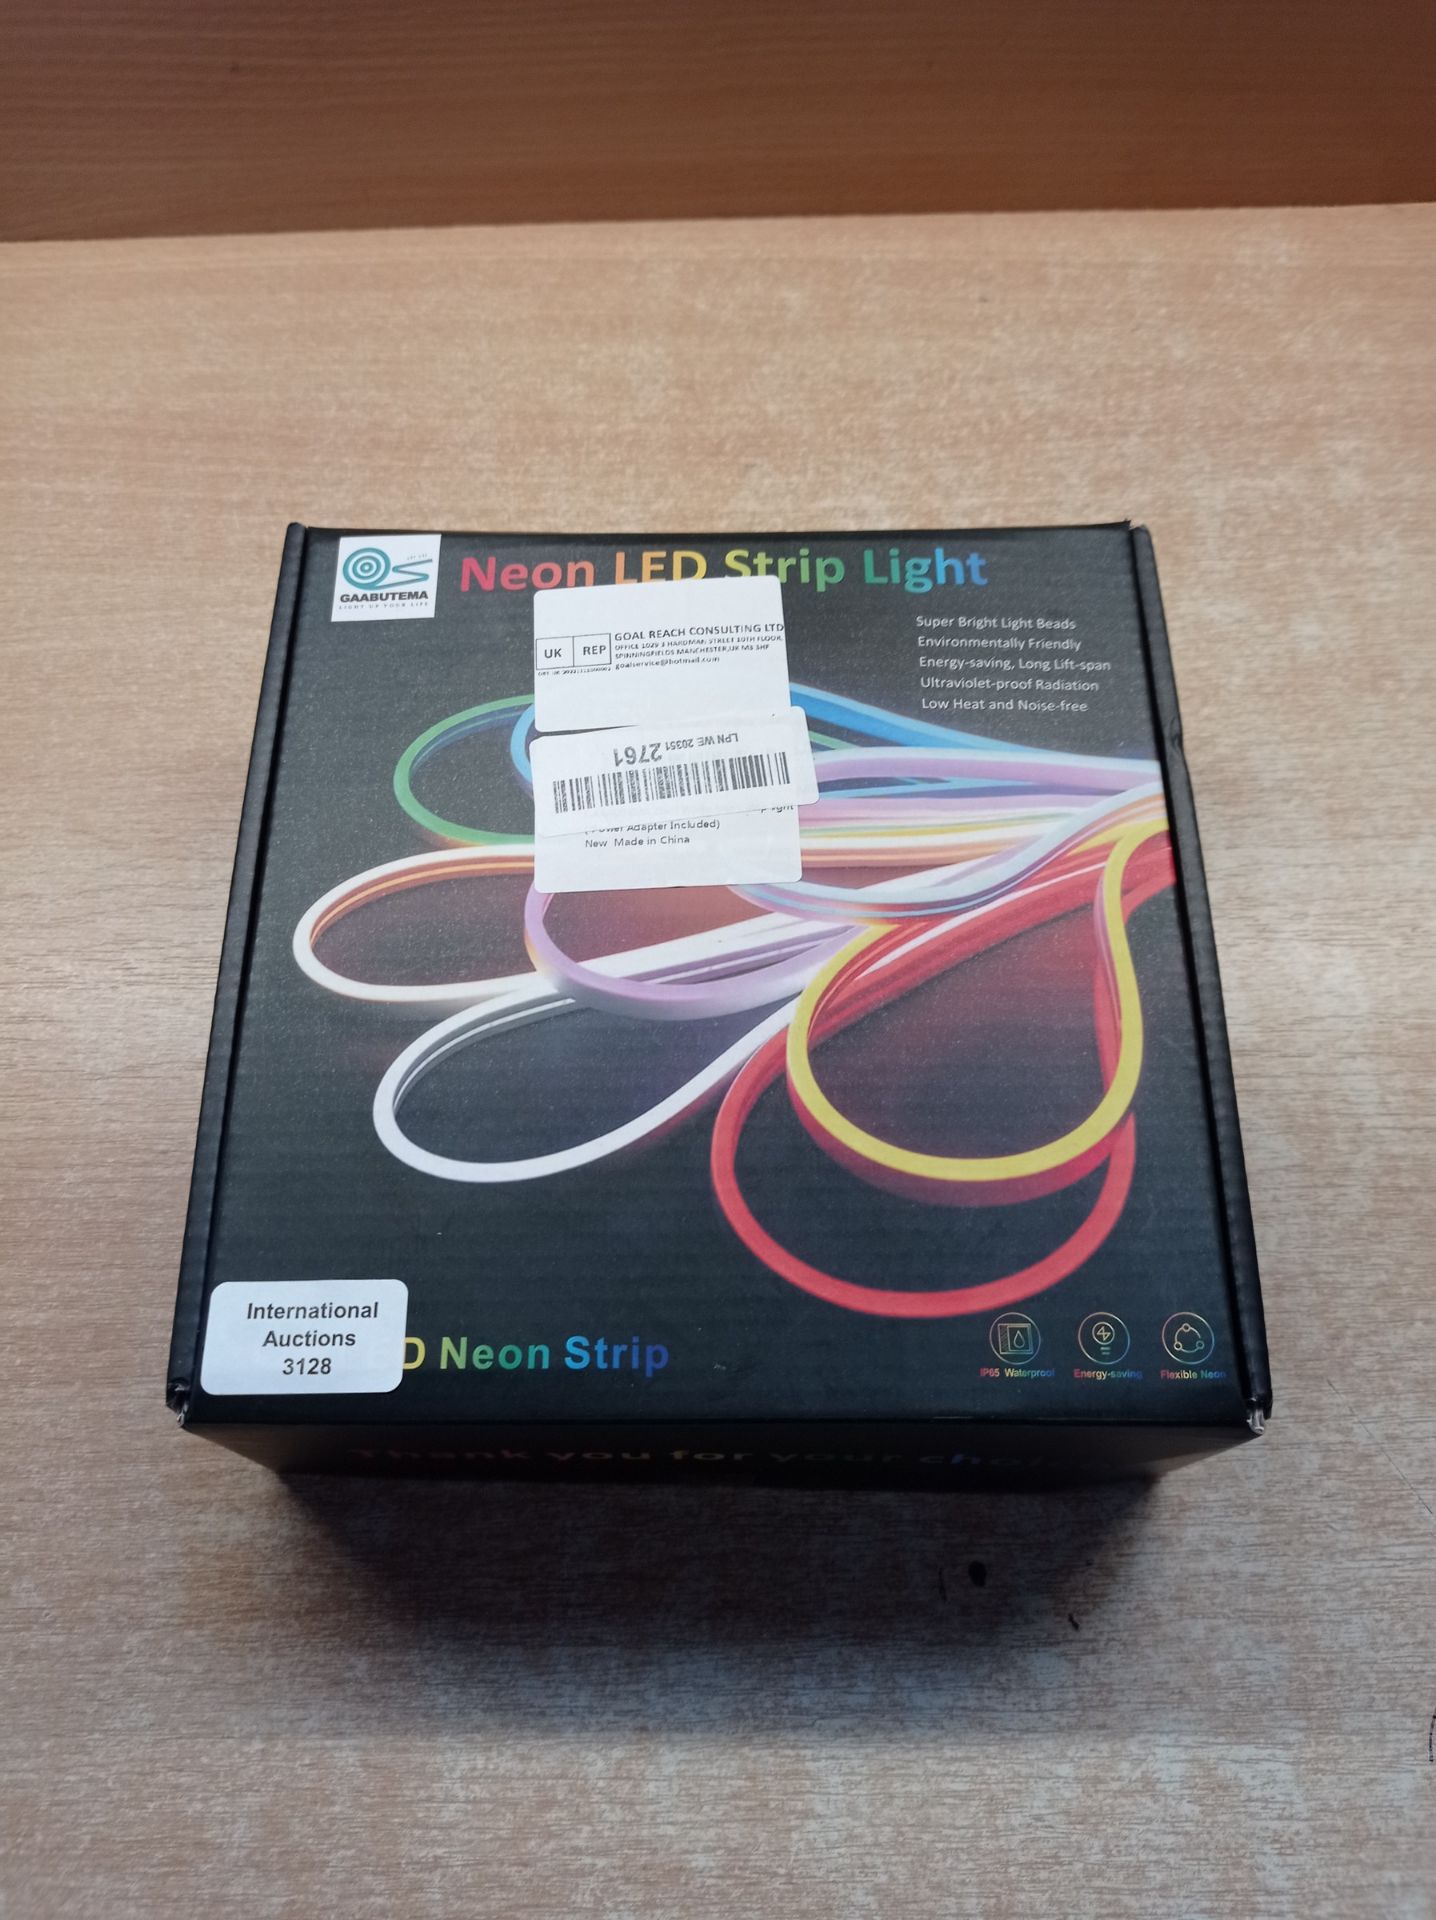 RRP £31.95 GAABUTEMA Cool White Neon LED Strip Light 5m - Image 2 of 2